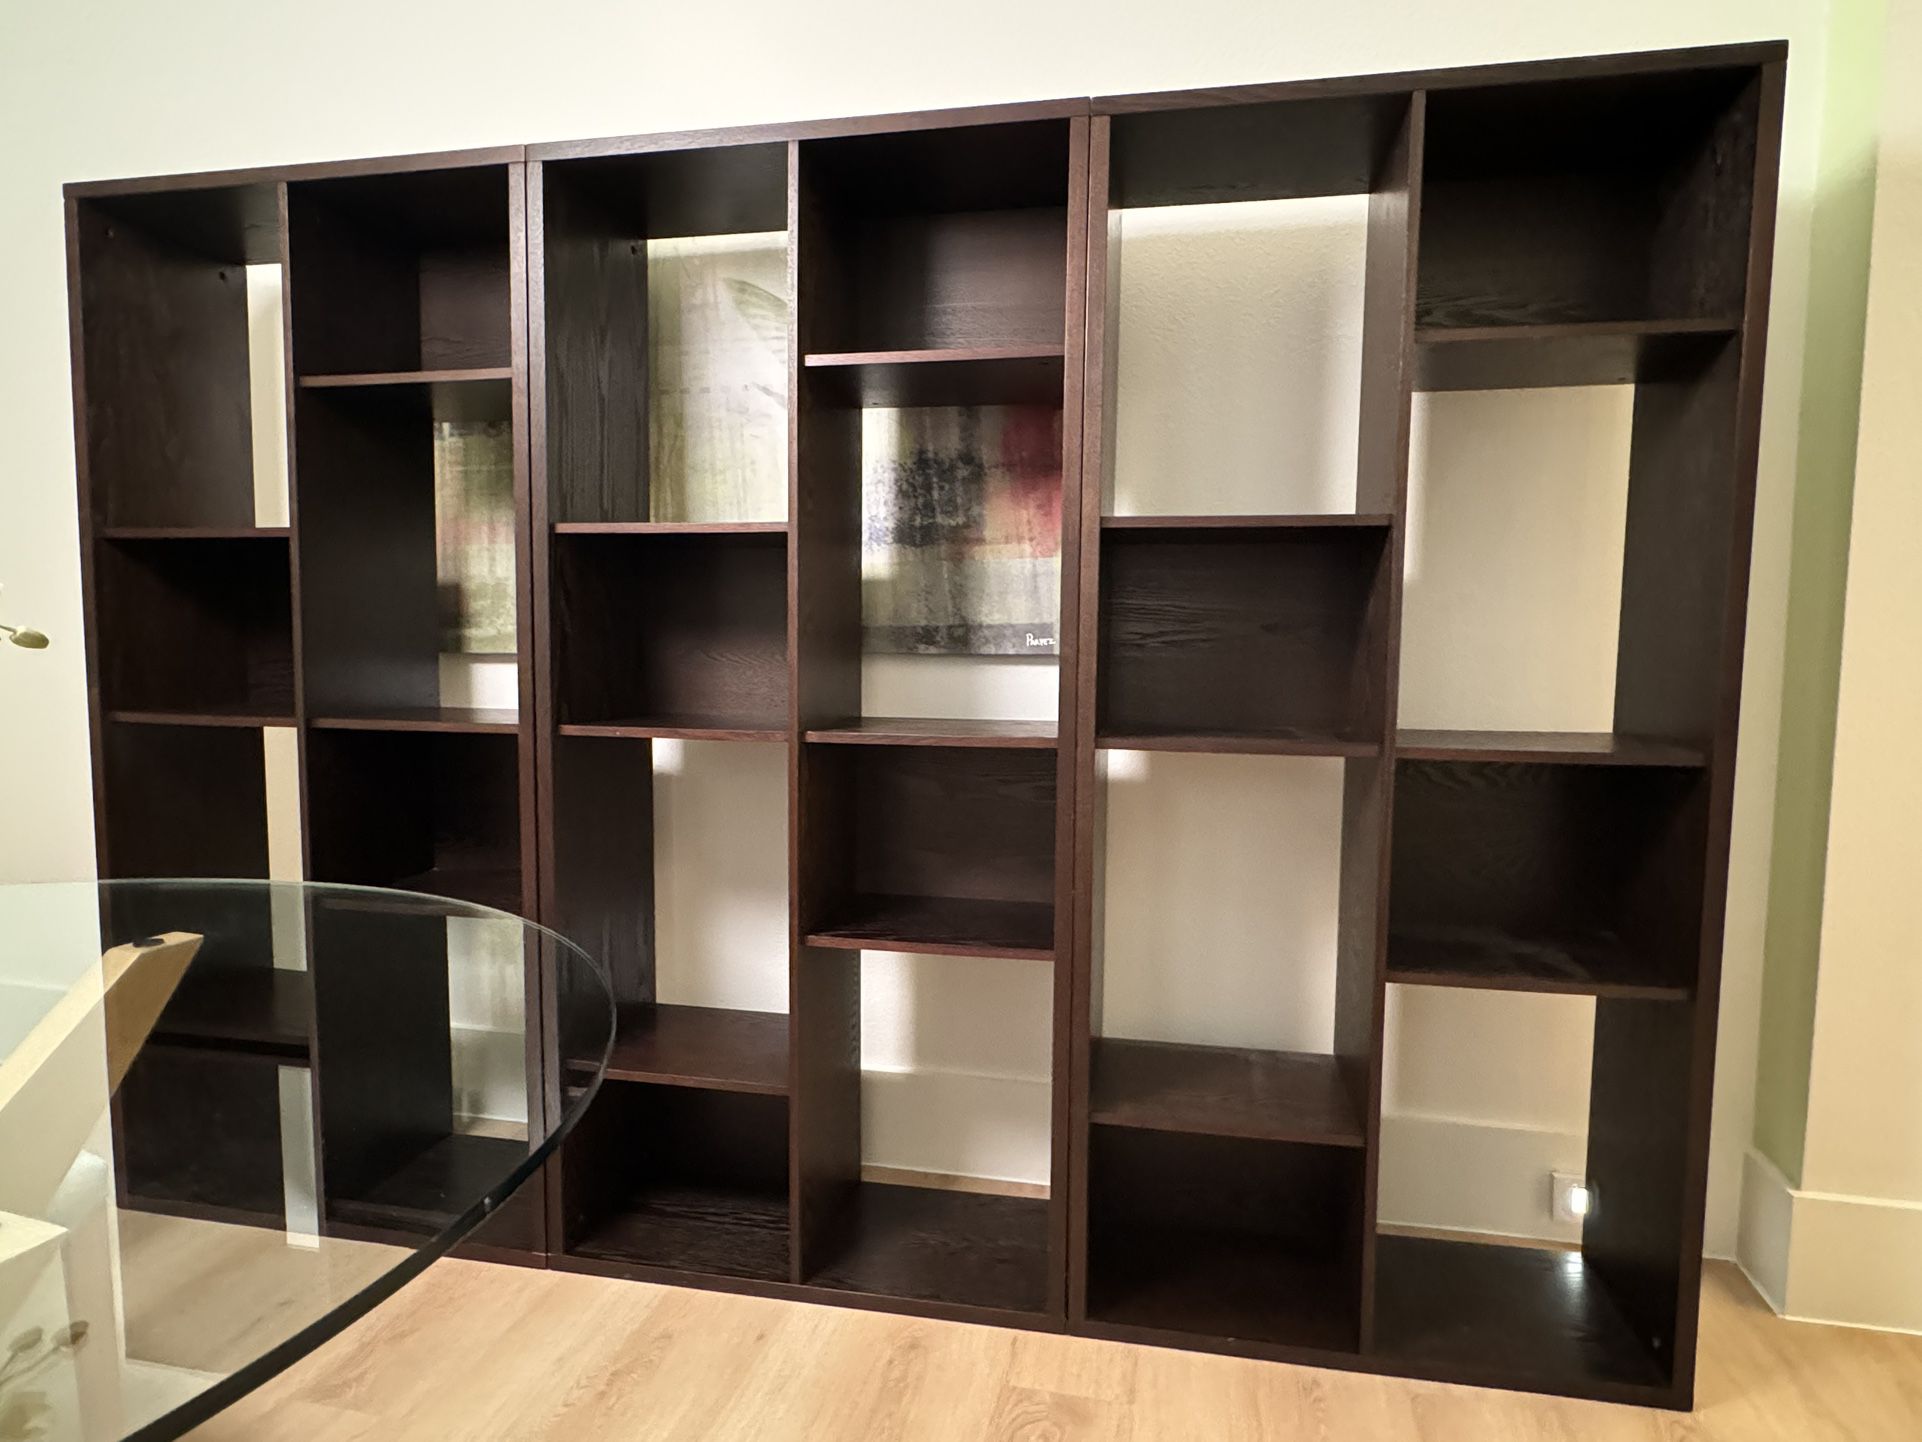  Lot Of 3 Manhattan Room Divider/Shelves by Target (DPCI: 249-07-0026)